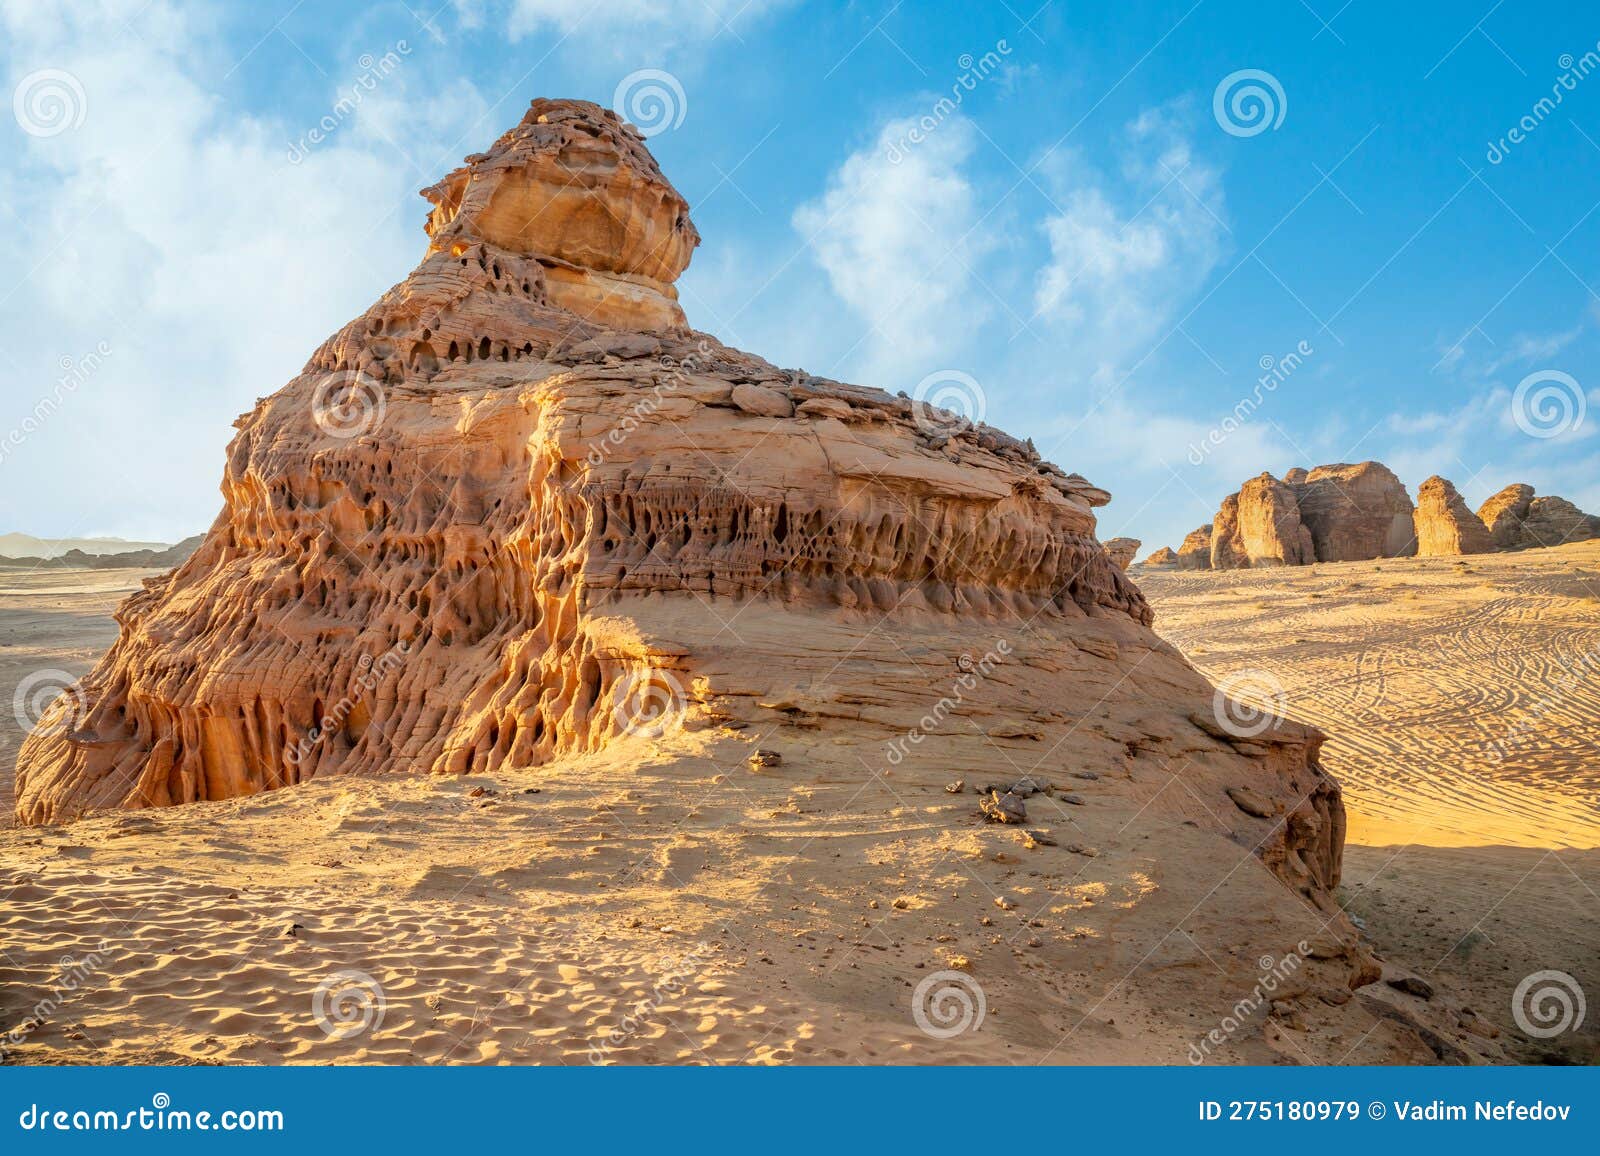 desert erosion formations near al ula, saudi arabia